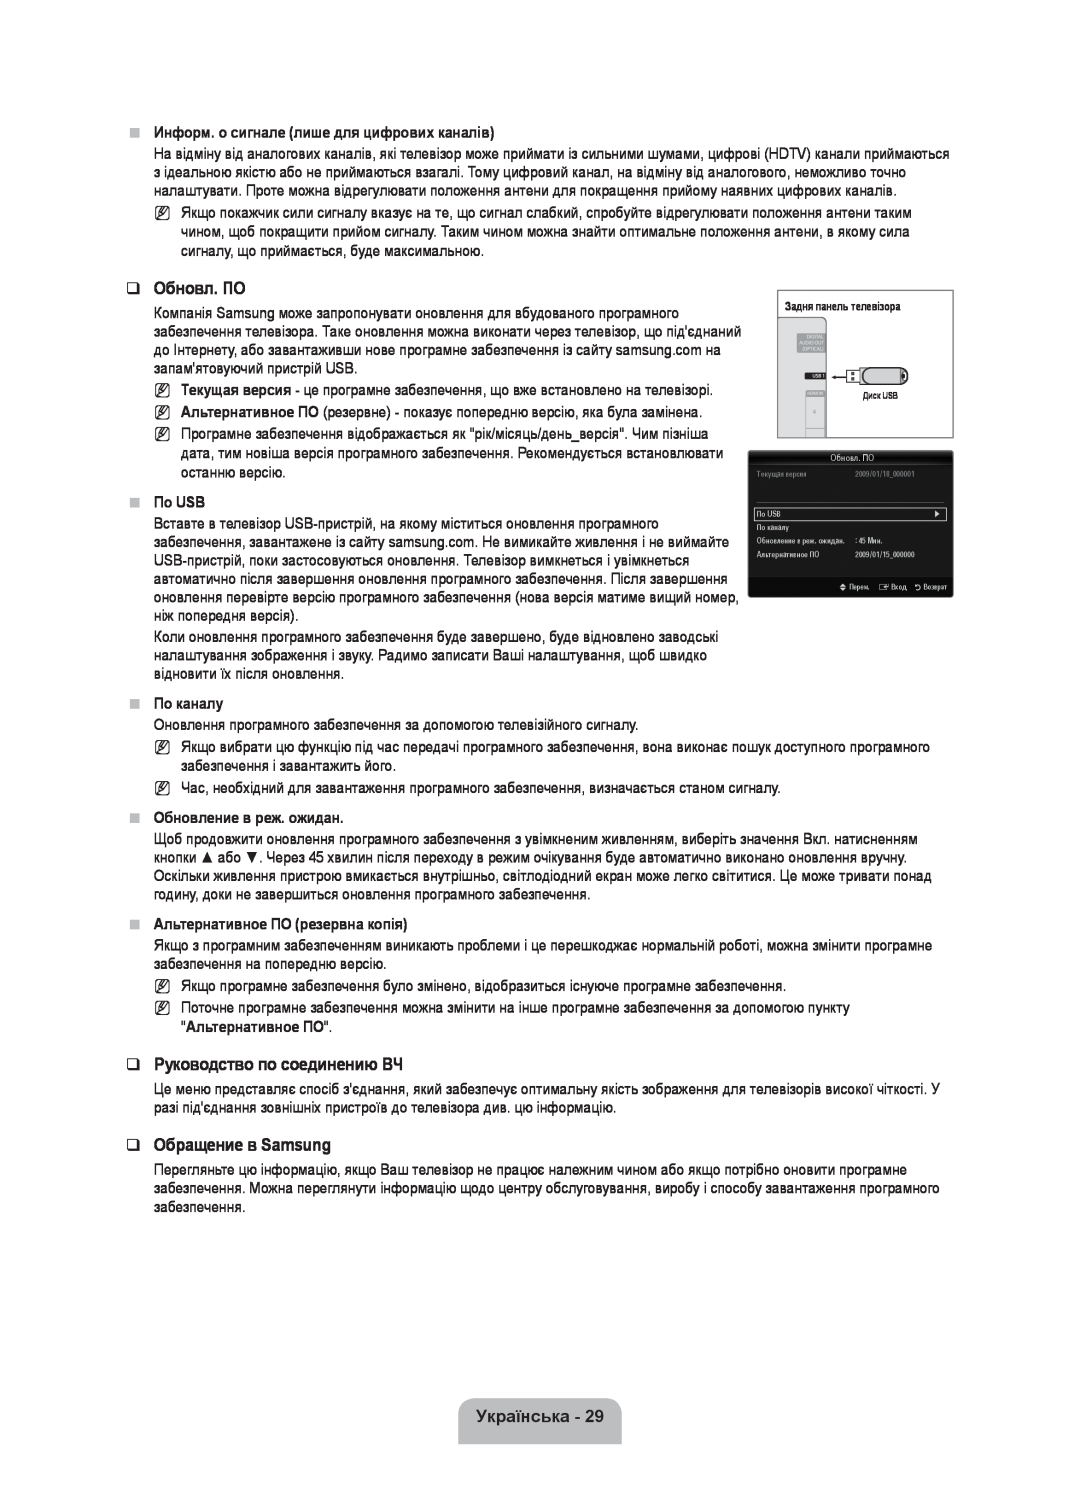 Samsung UE46B6000VWXZG manual Руководство по соединению ВЧ, Информ. о сигнале лише для цифрових каналів, Альтернативное ПО 